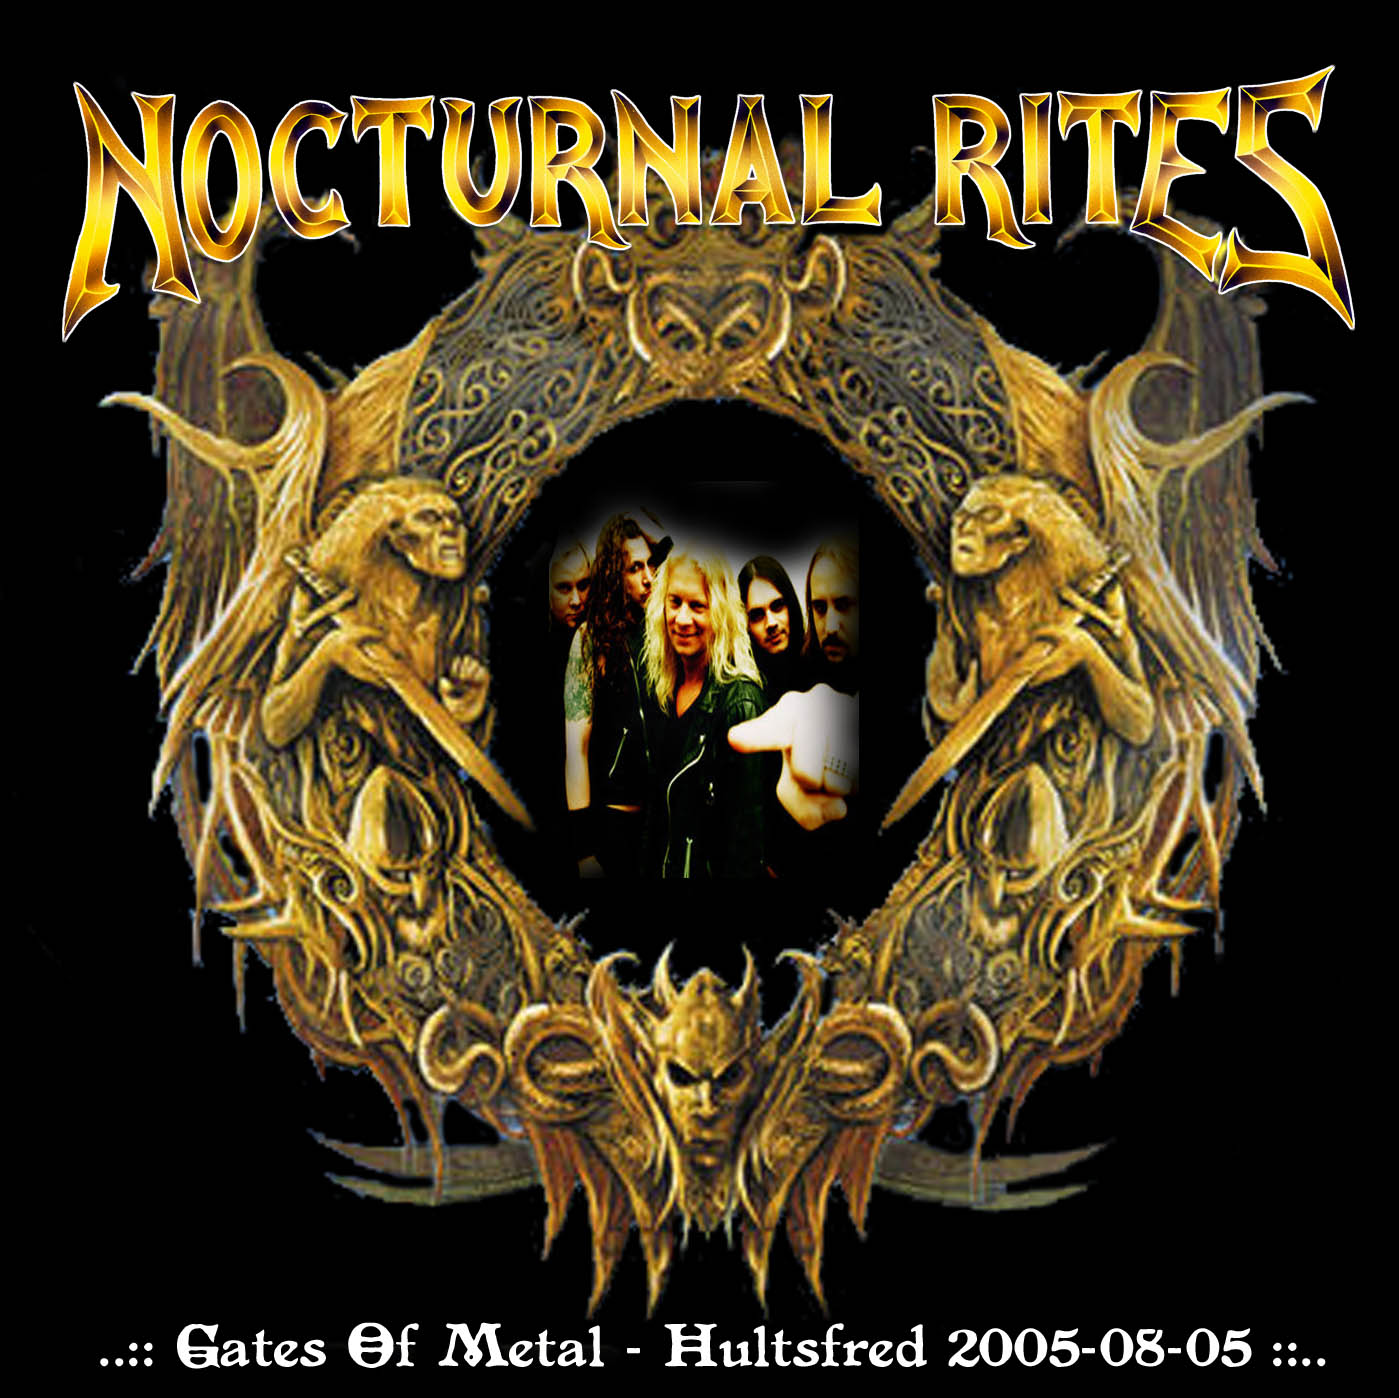 Nocturnal rites grand illusion download